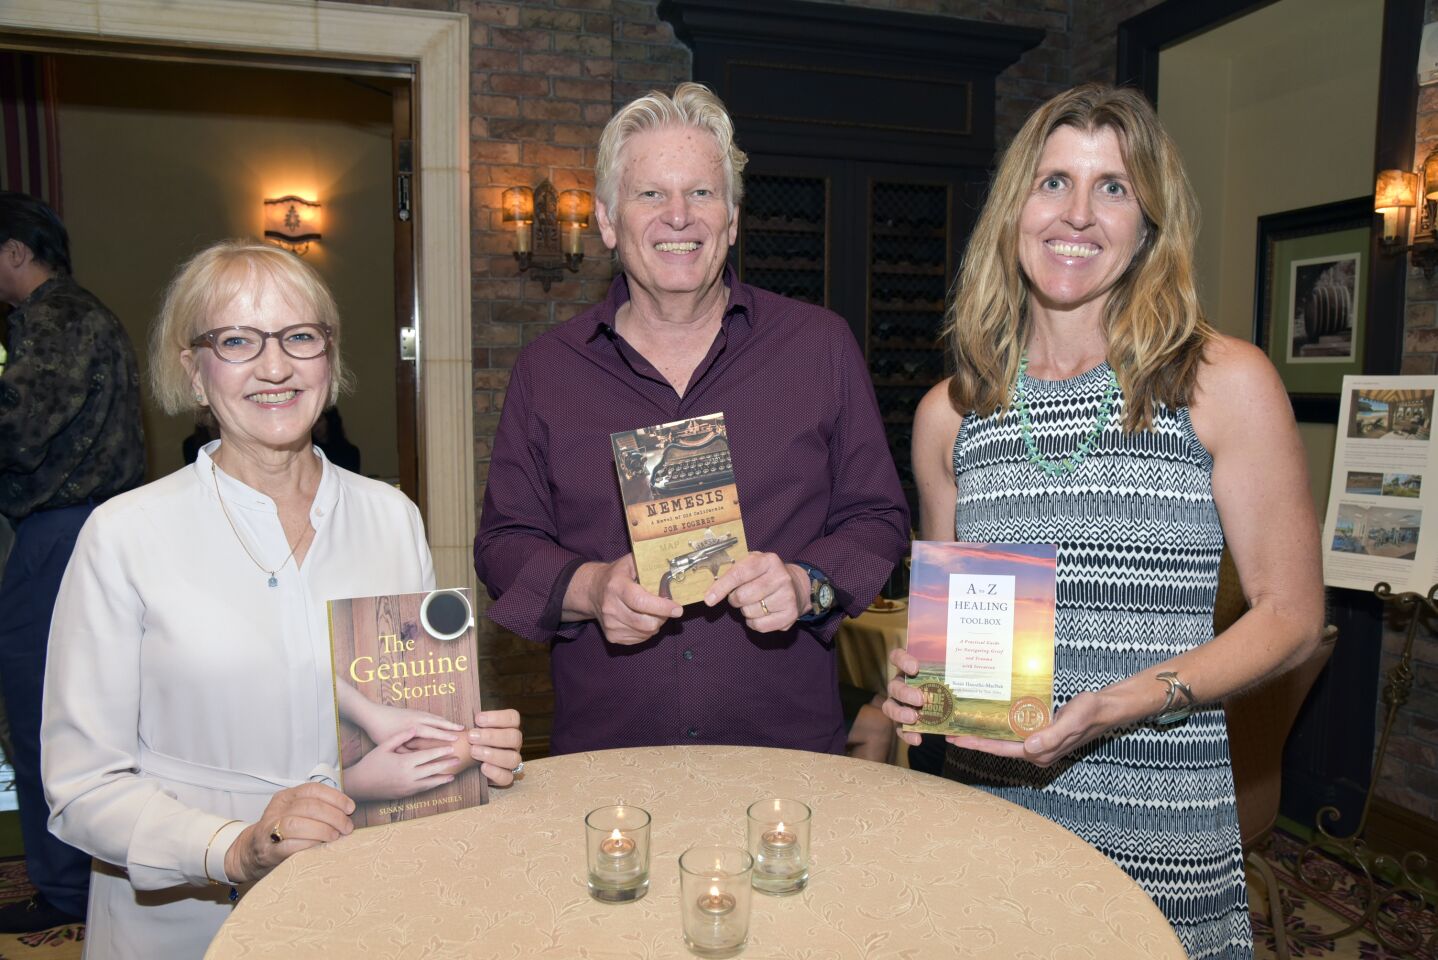 Author Susan Smith Daniels, Author/Speaker Joe Yogerst, Author Susan Hannifin-MacNab